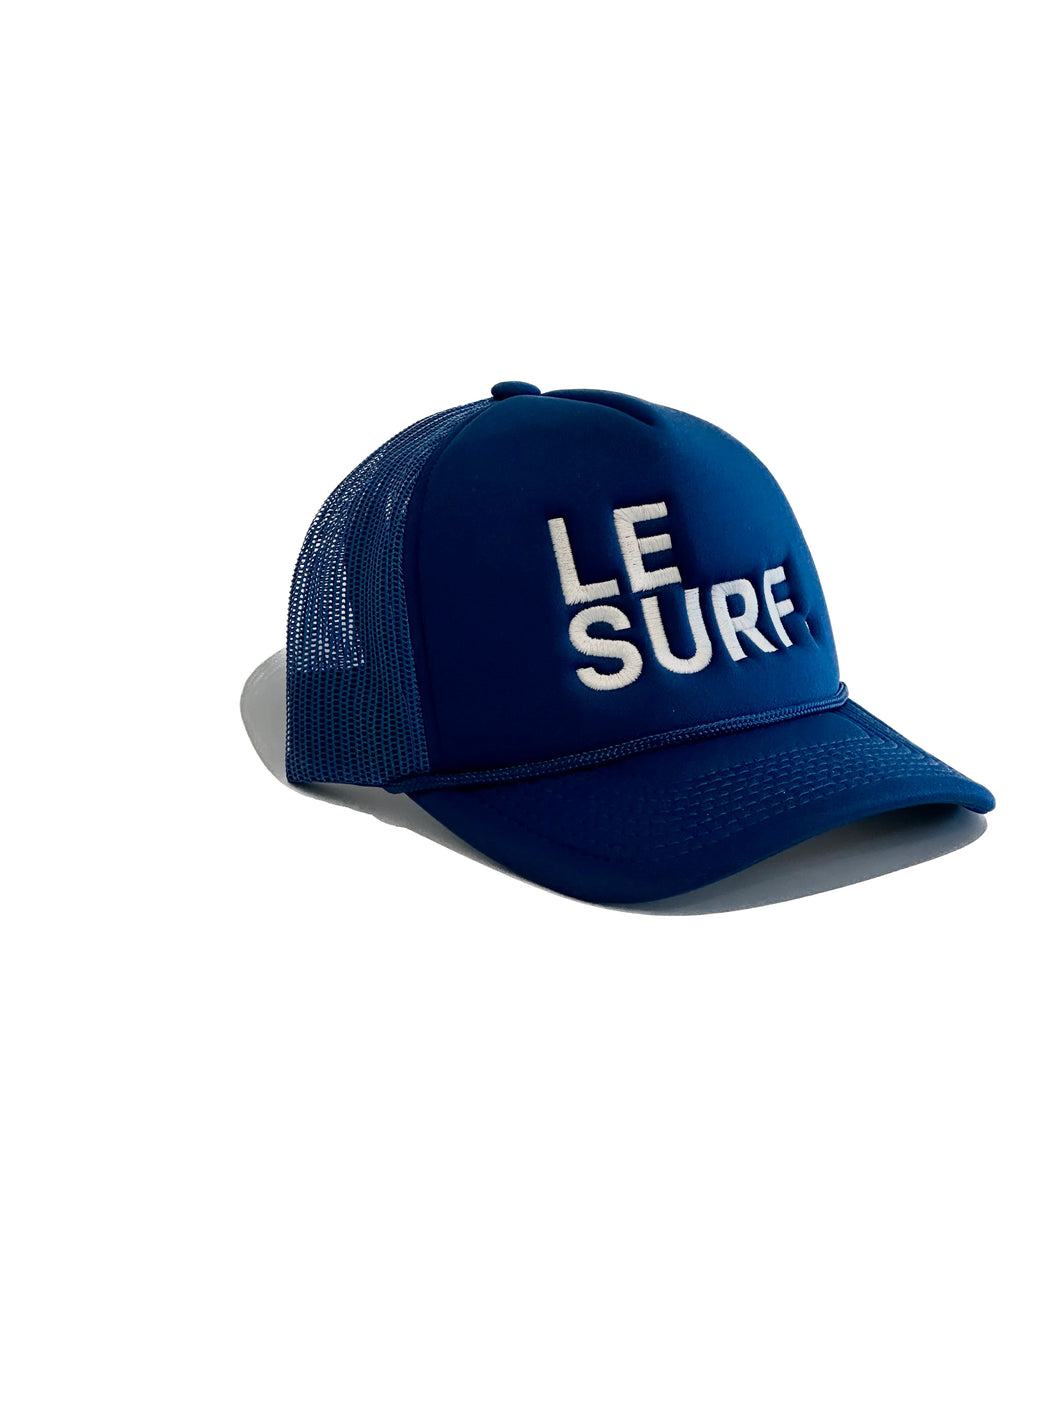 Le Surf. Hat NAVY-WHITE